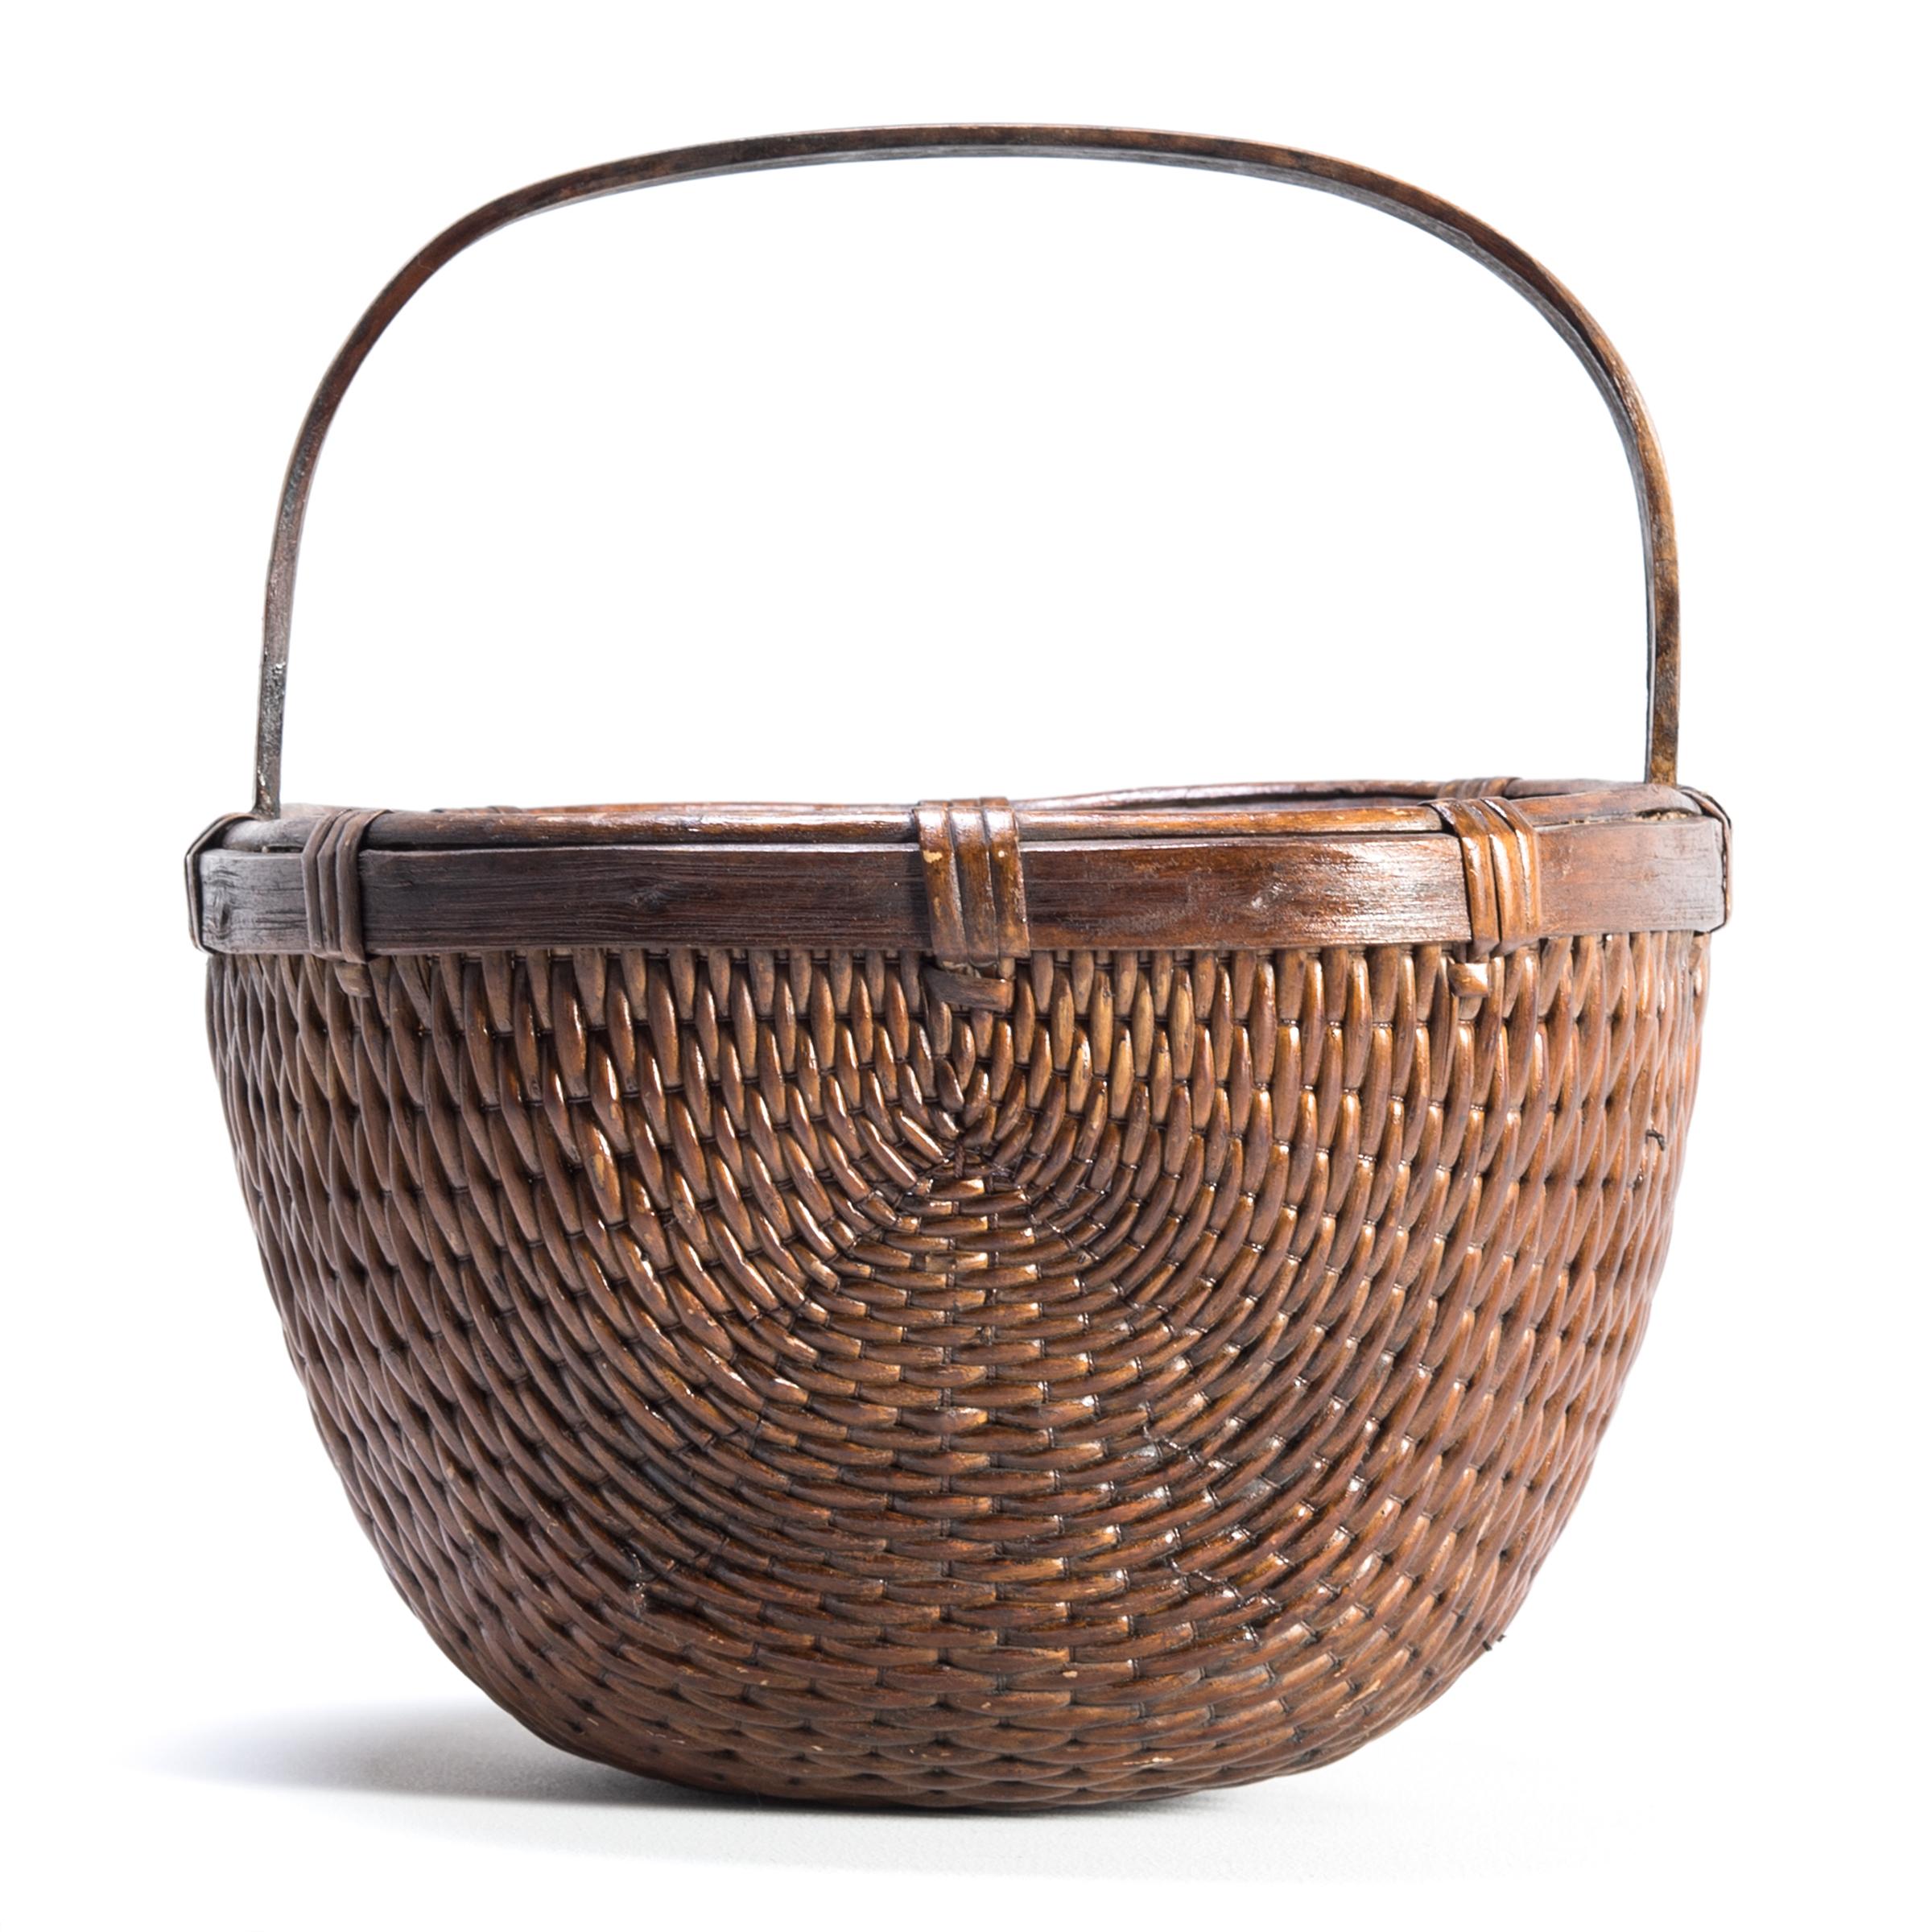 Rustic Chinese Willow Market Basket, circa 1900